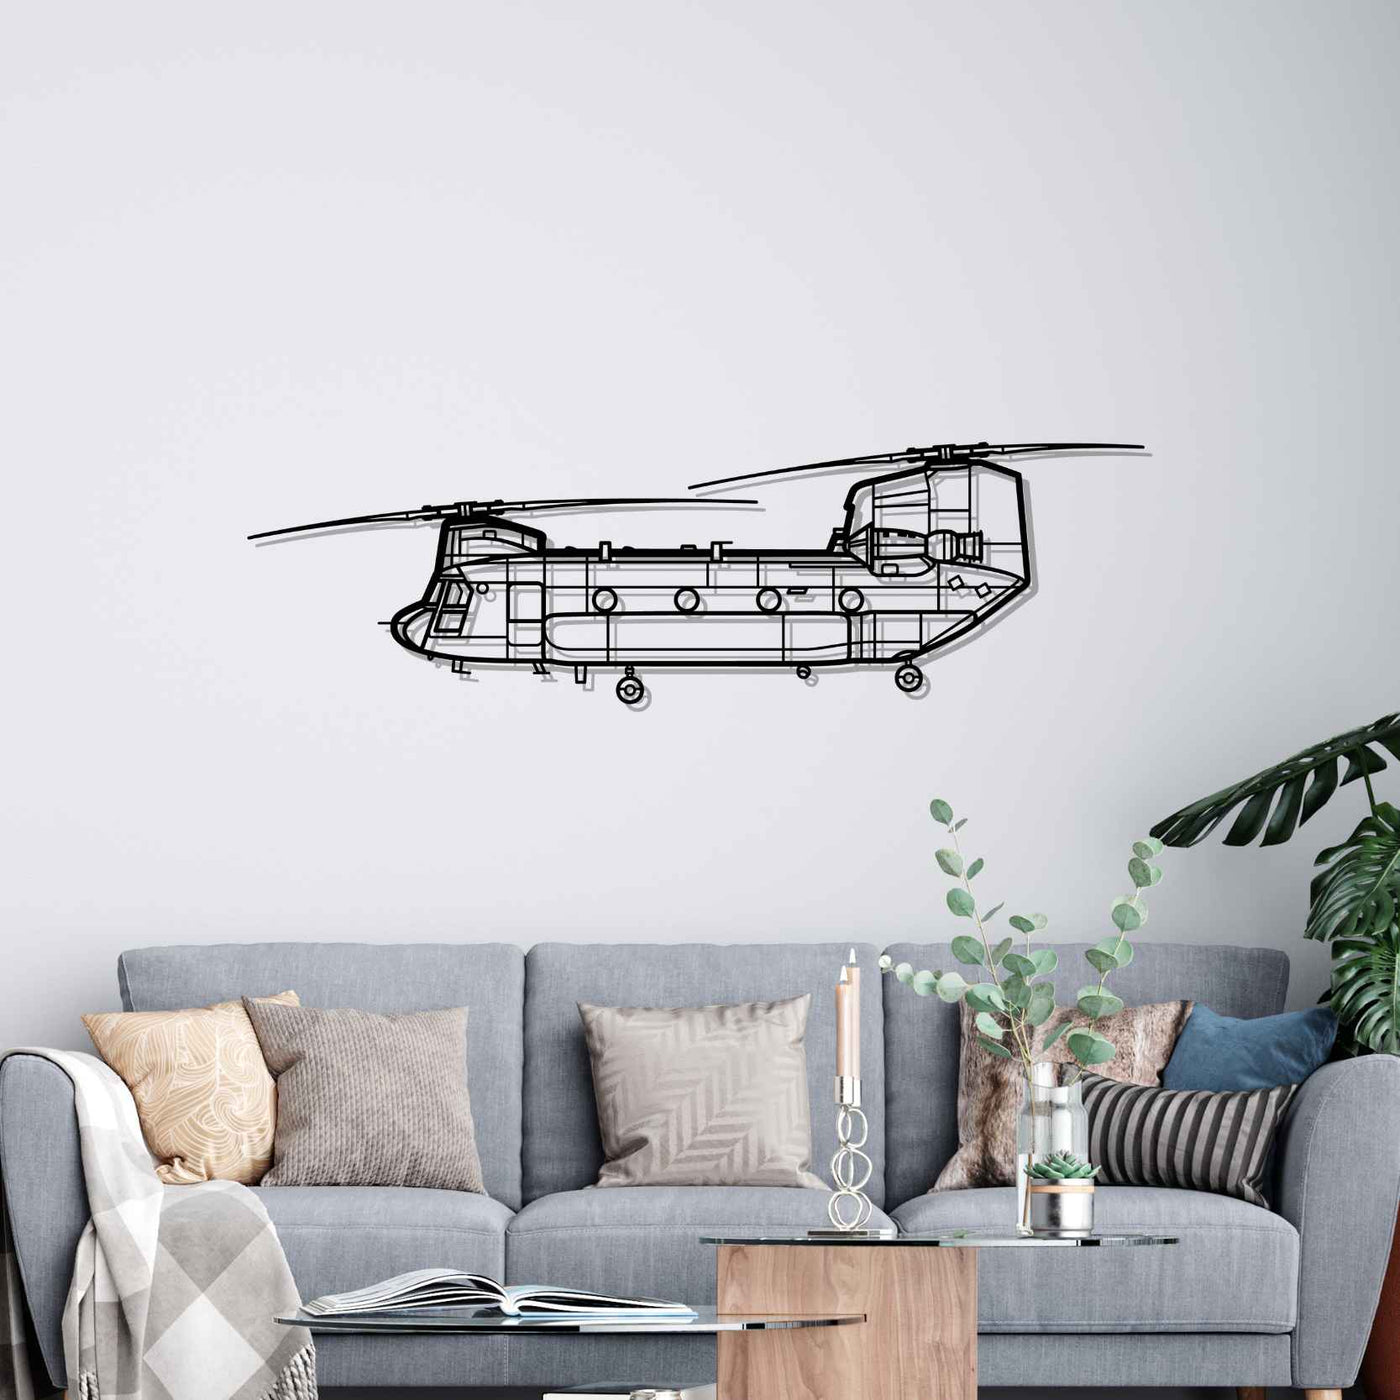 Chinook CH-47 Silhouette Metal Wall Art